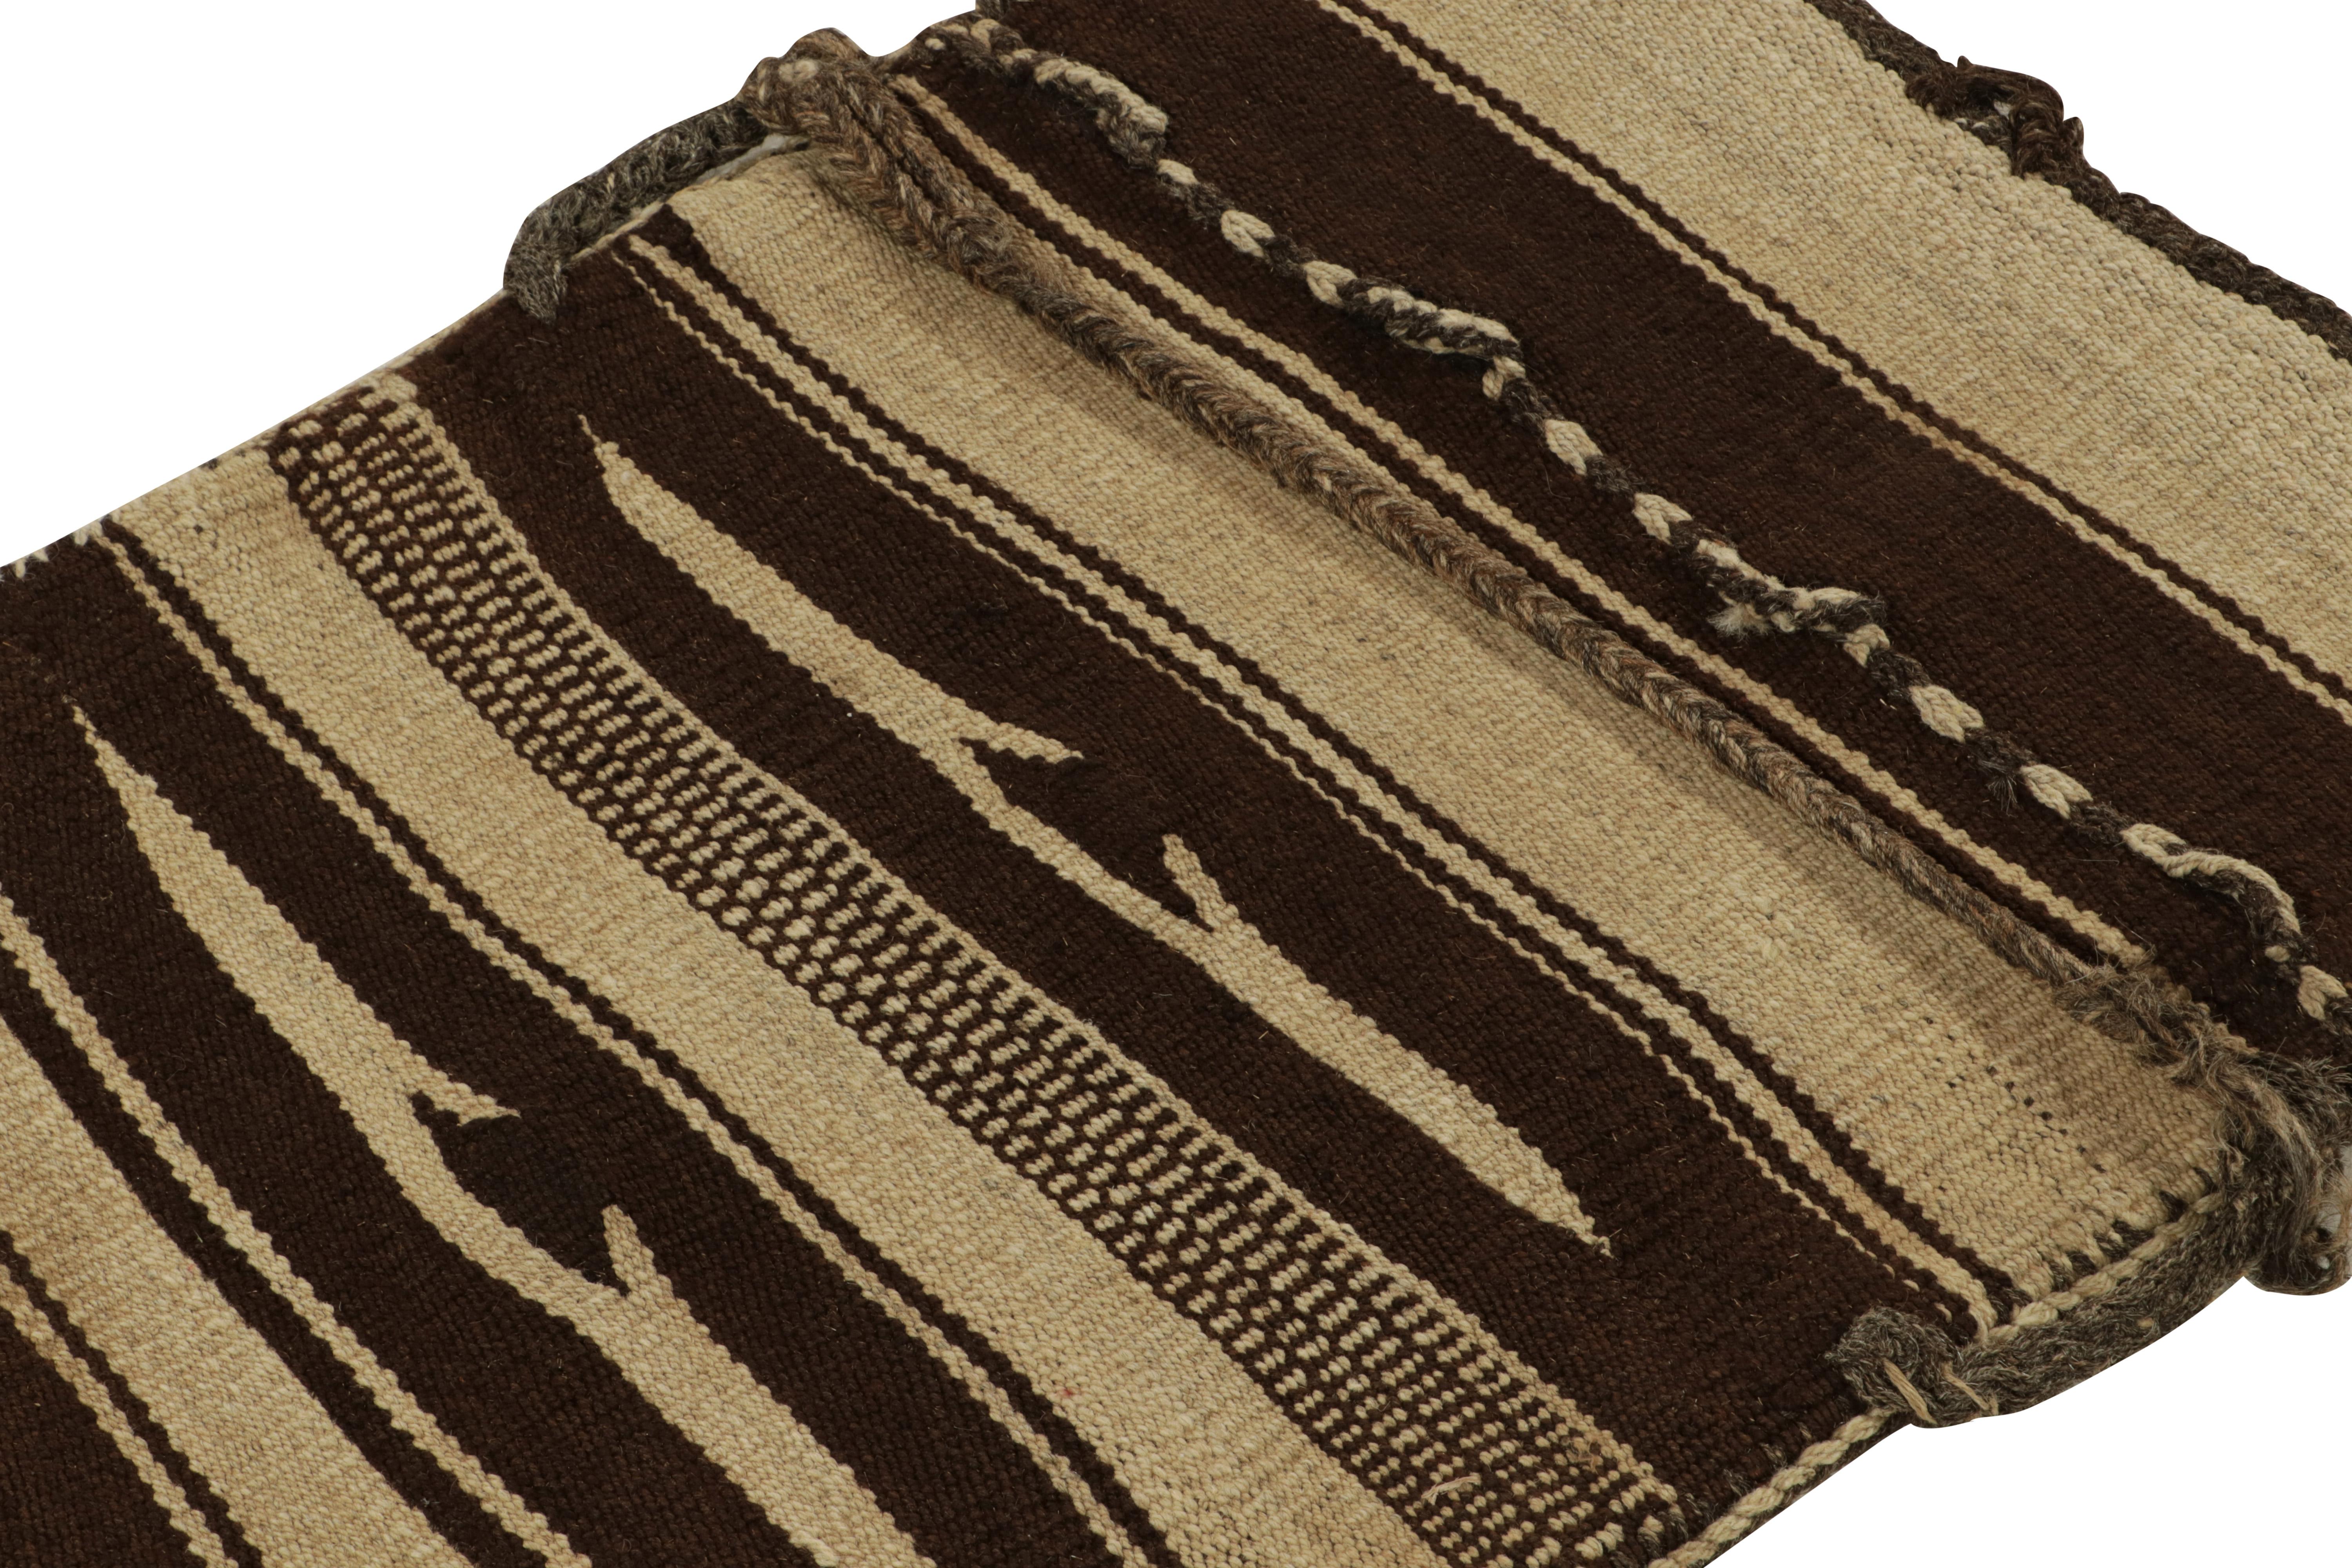 Hand-Knotted 1960s Vintage Kilim Rug in Beige, Brown Tribal Bag Design by Rug & Kilim For Sale